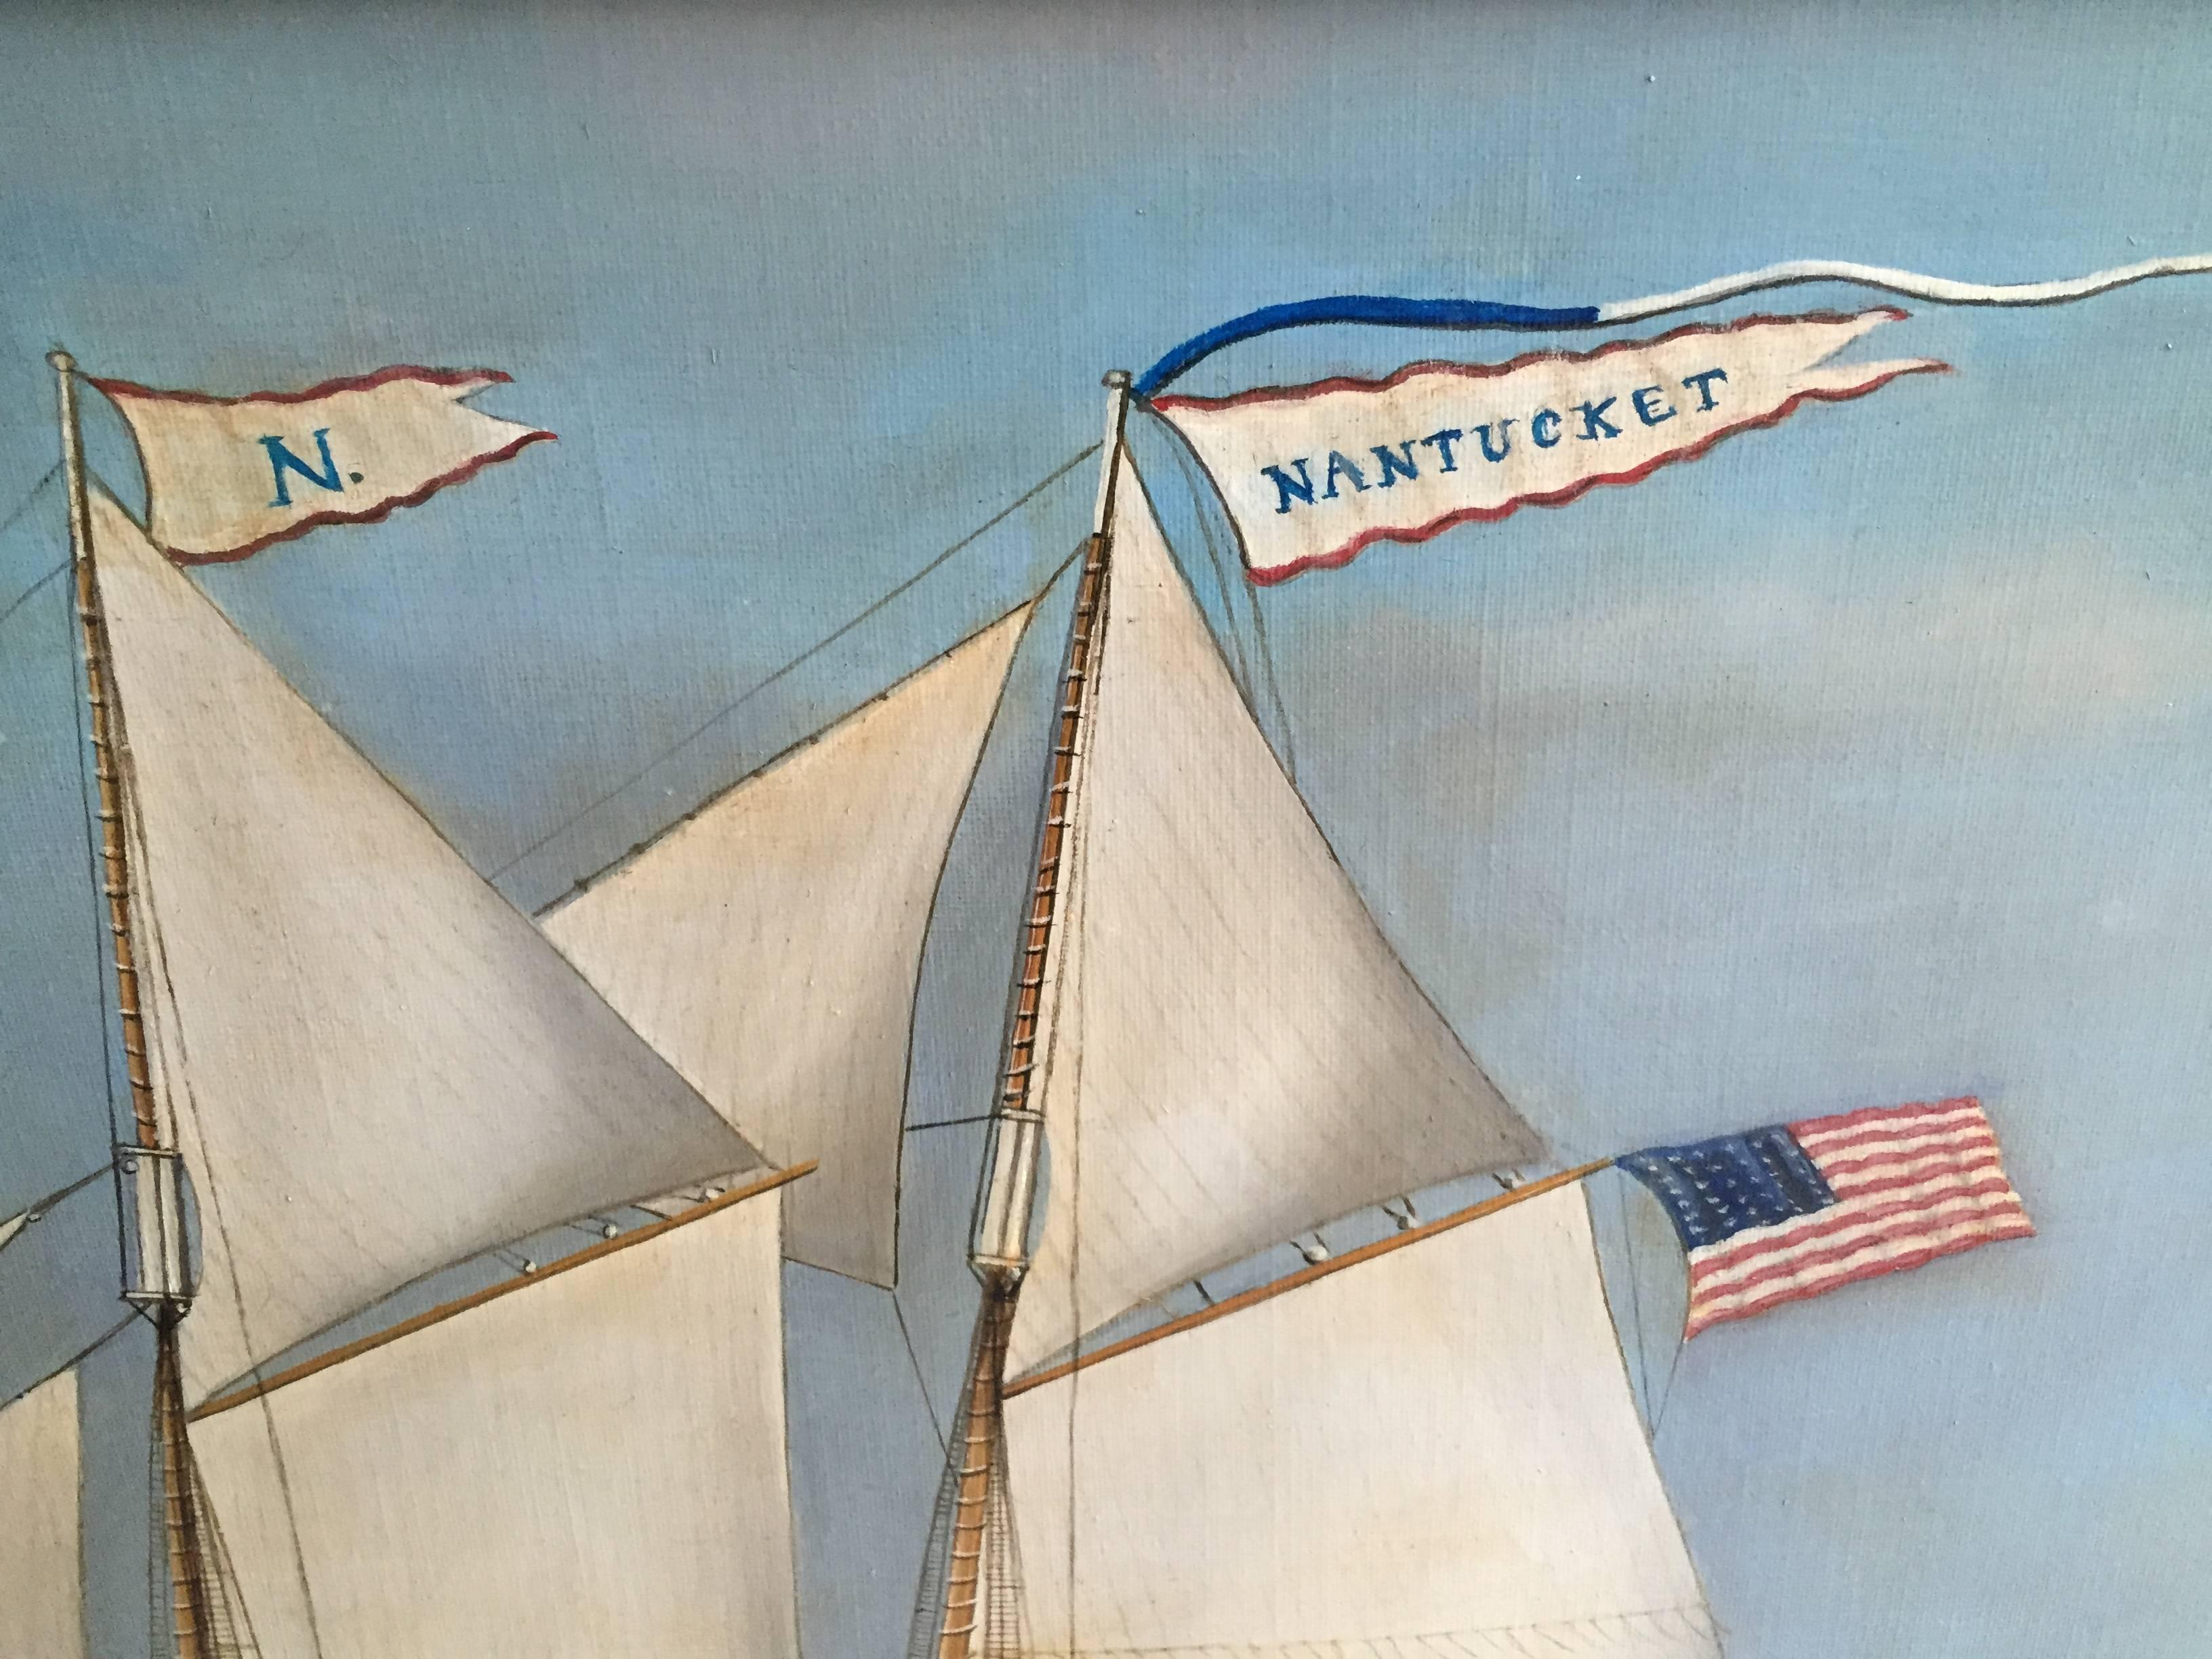 Reginald Nickerson (American, 1915-1999) Schooner NANTUCKET Marine Oil Painting For Sale 2